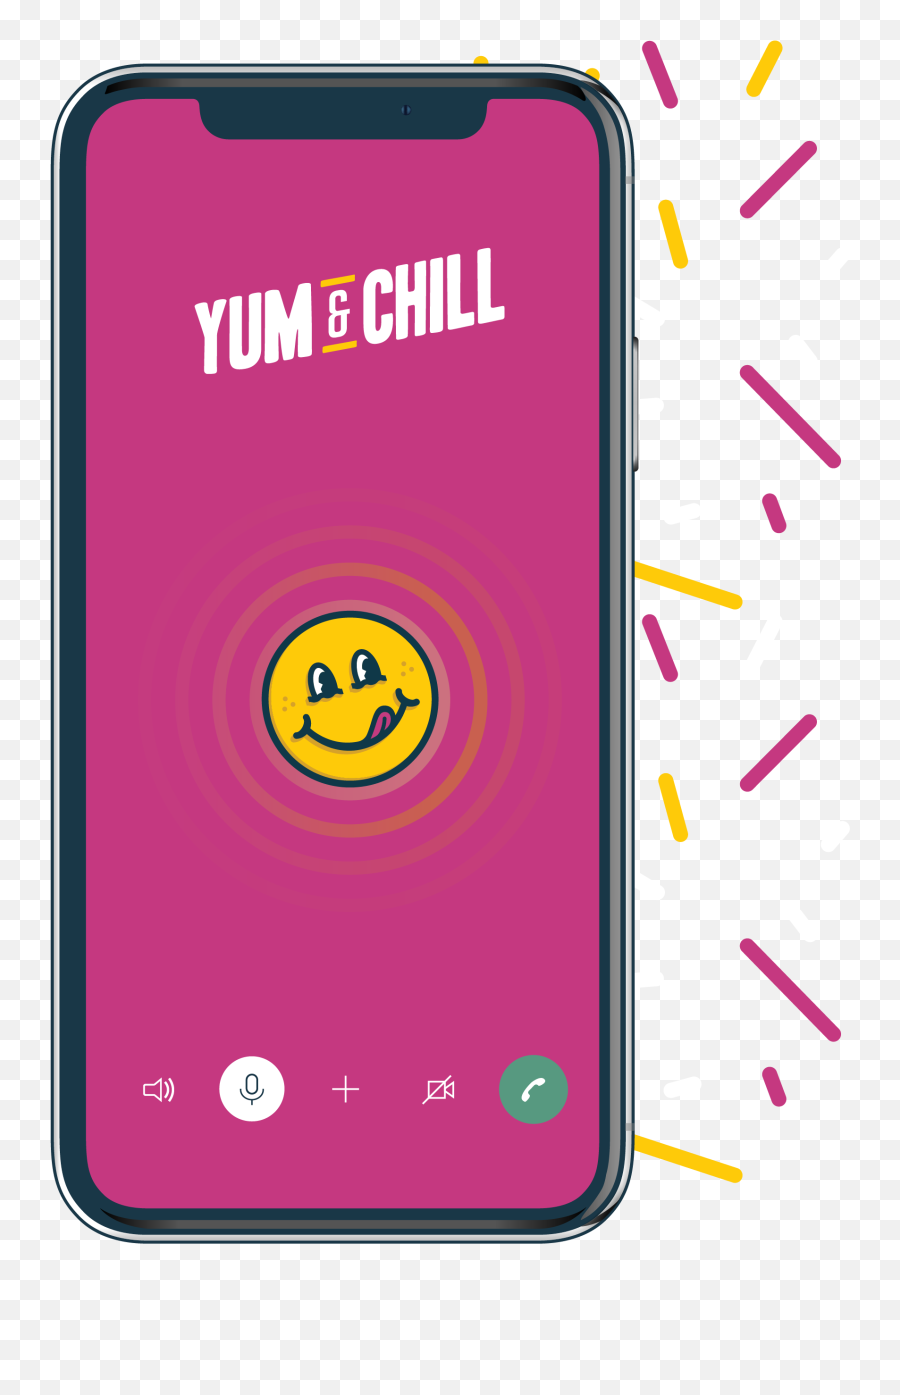 Contact - Smartphone Emoji,Chill Out Emoticon